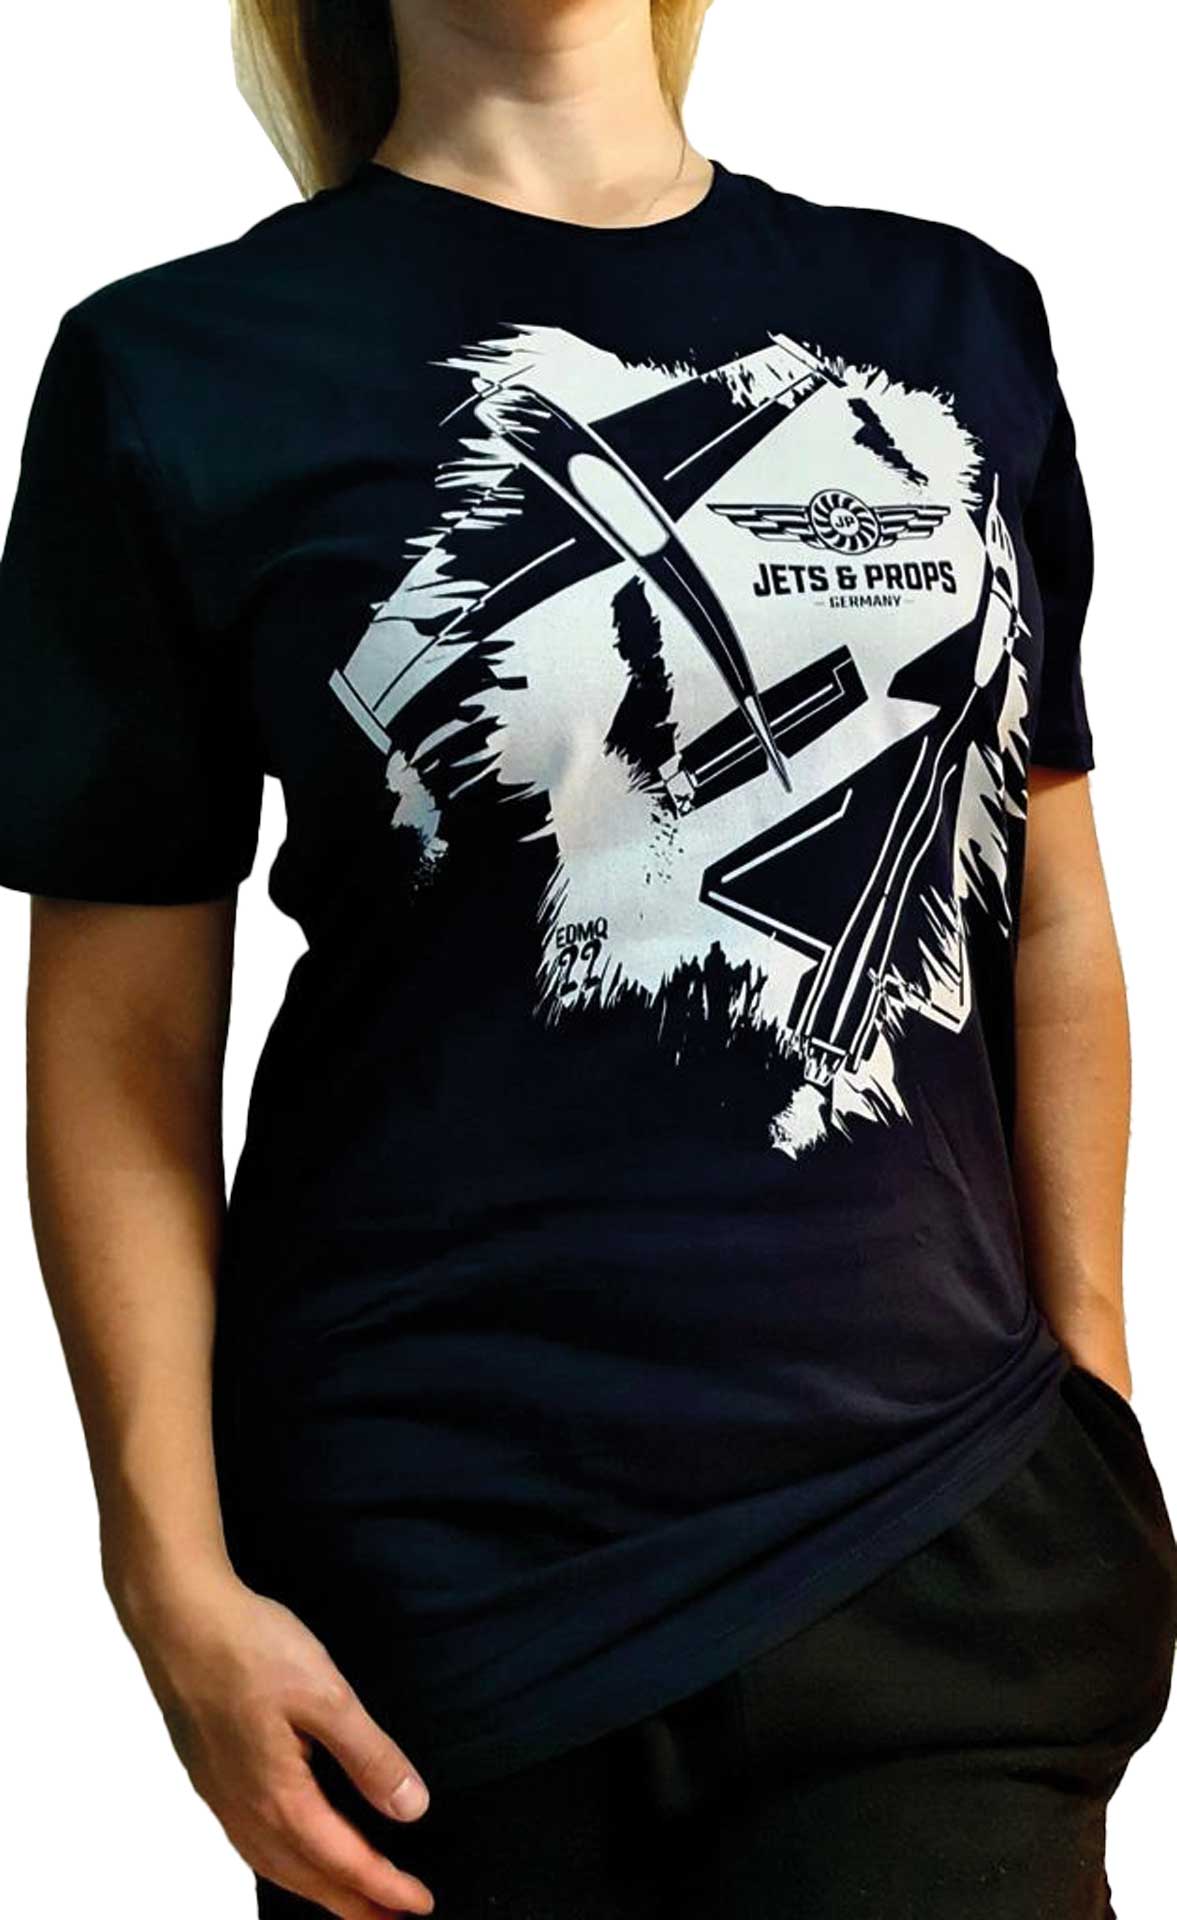 DIVERSE T-Shirt "XXXL" Jets & Props grunge big 400, Premium, Navy, Digital direct print